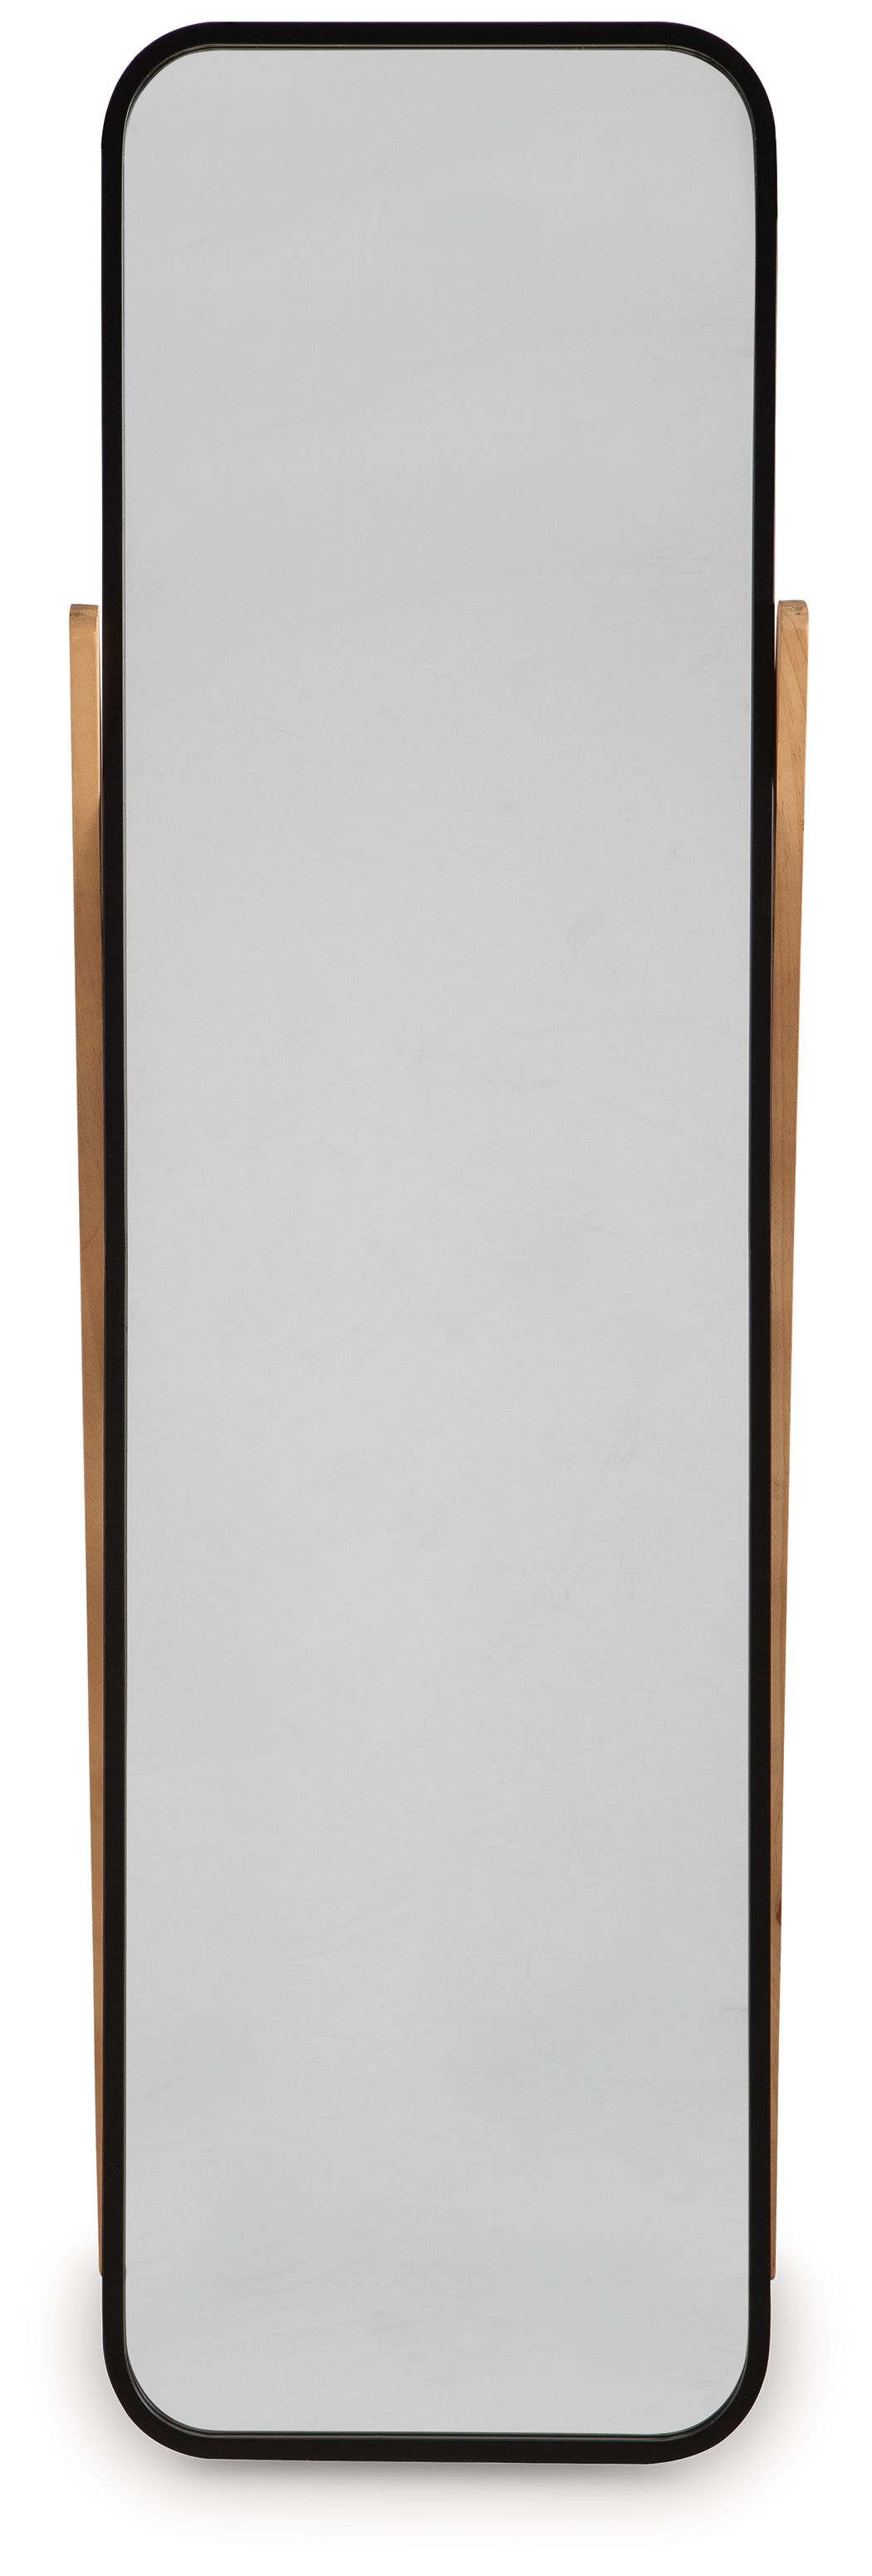 Bronick - Black / Brown - Floor Mirror Signature Design by Ashley® 